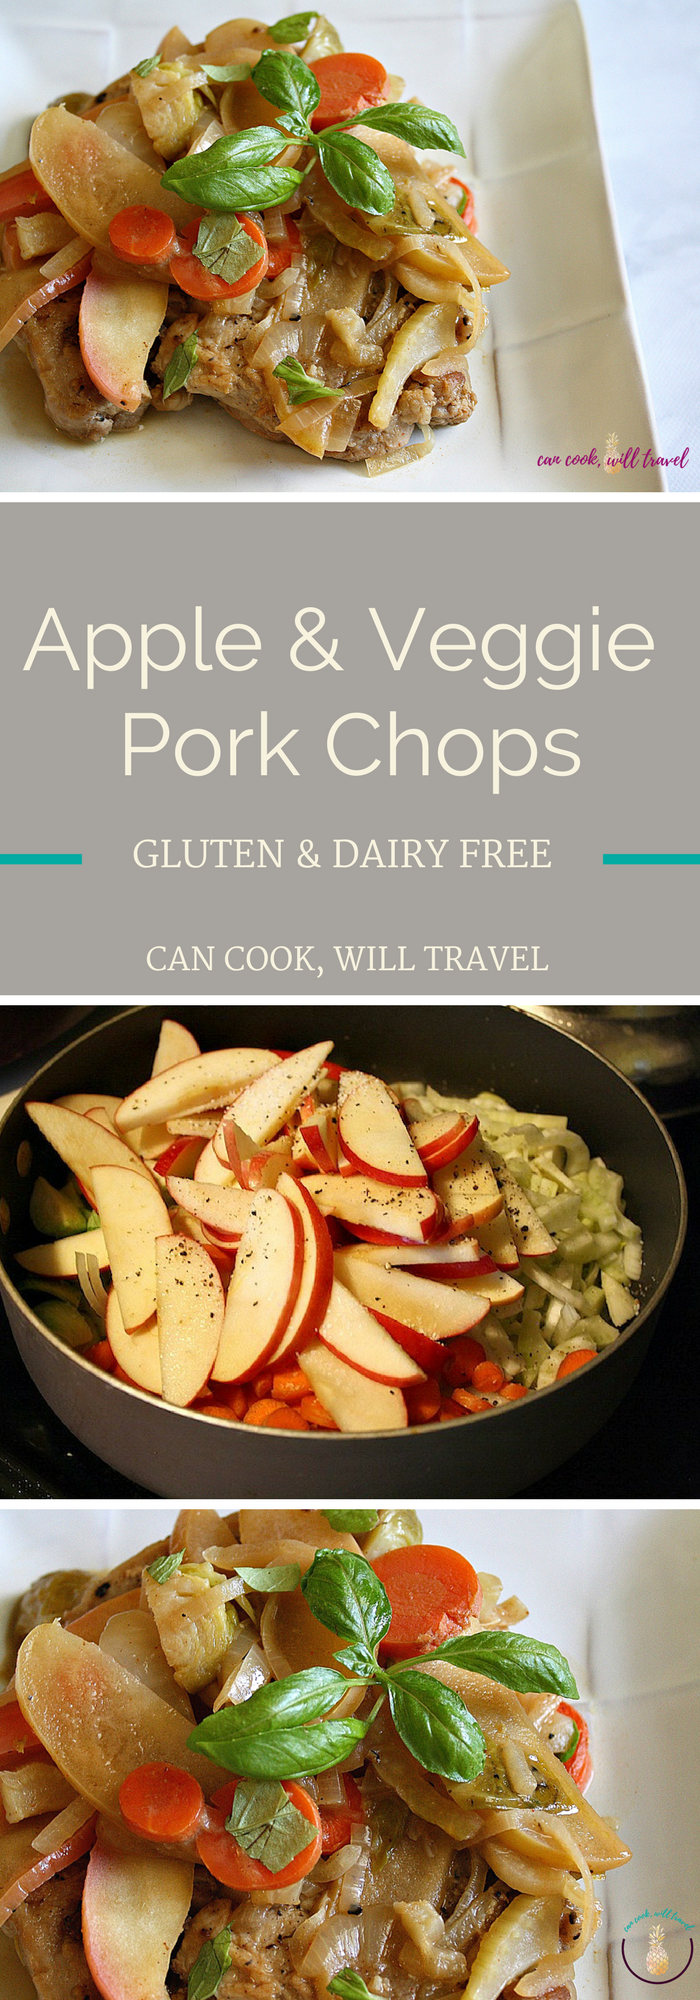 Apple & Veggie Pork Chops_Collage2